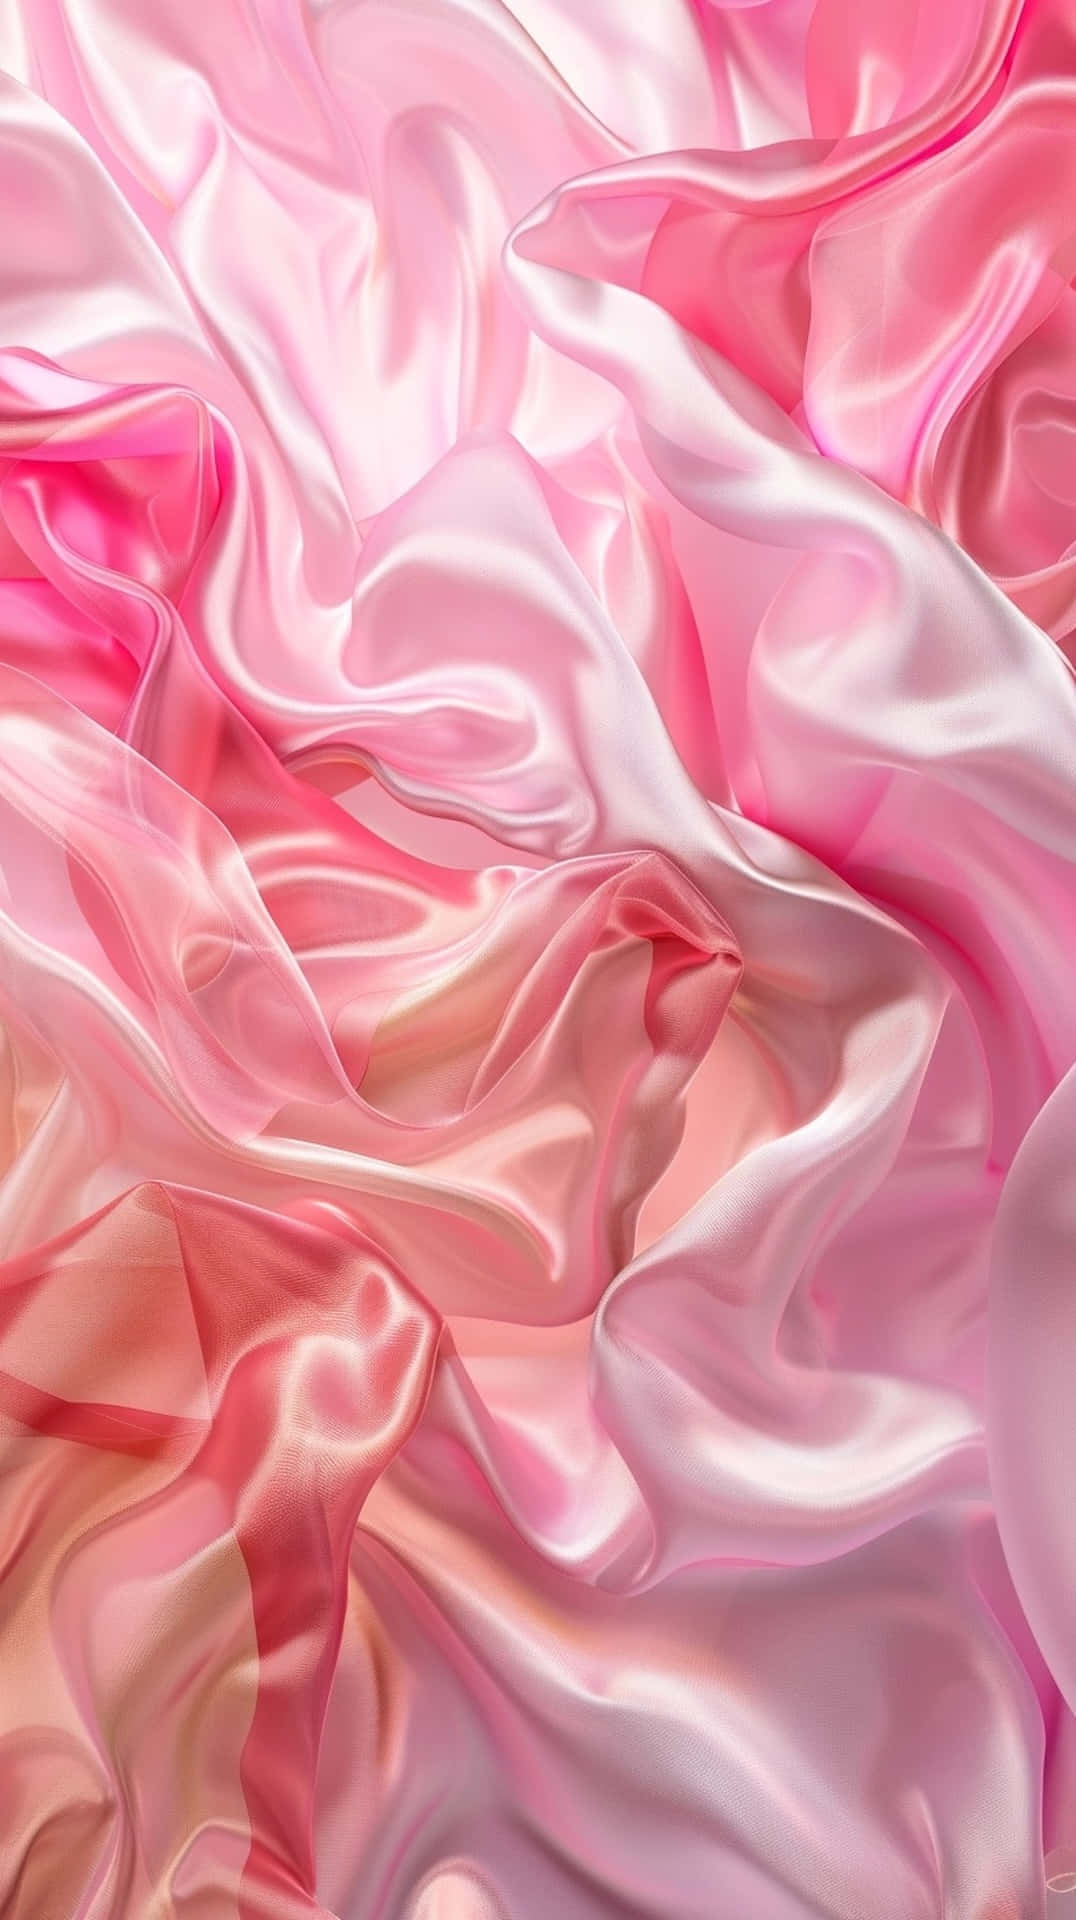 Pink Satin Fabric Waves Wallpaper